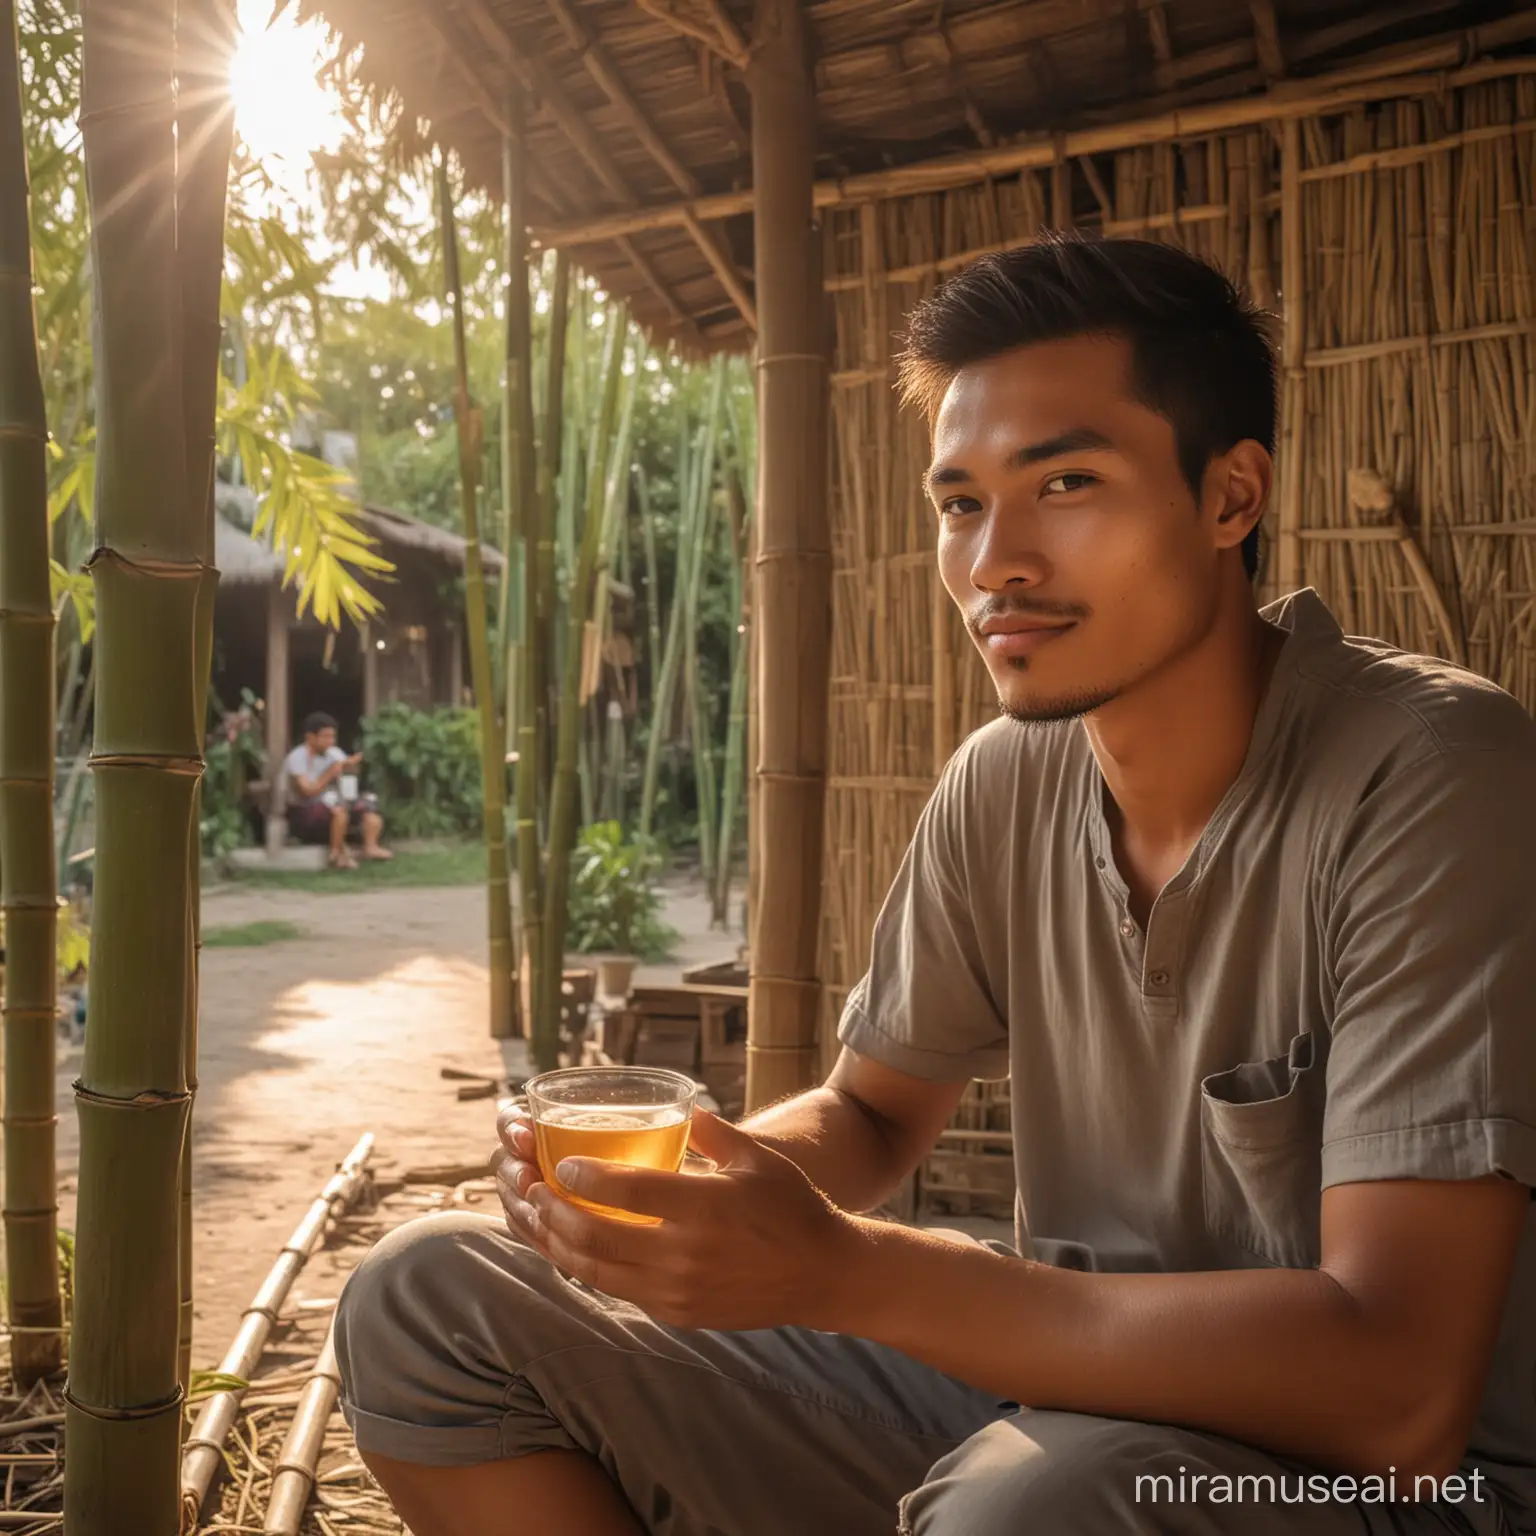 Indonesian Man Enjoying Tea in Bamboo Shack Market Scene